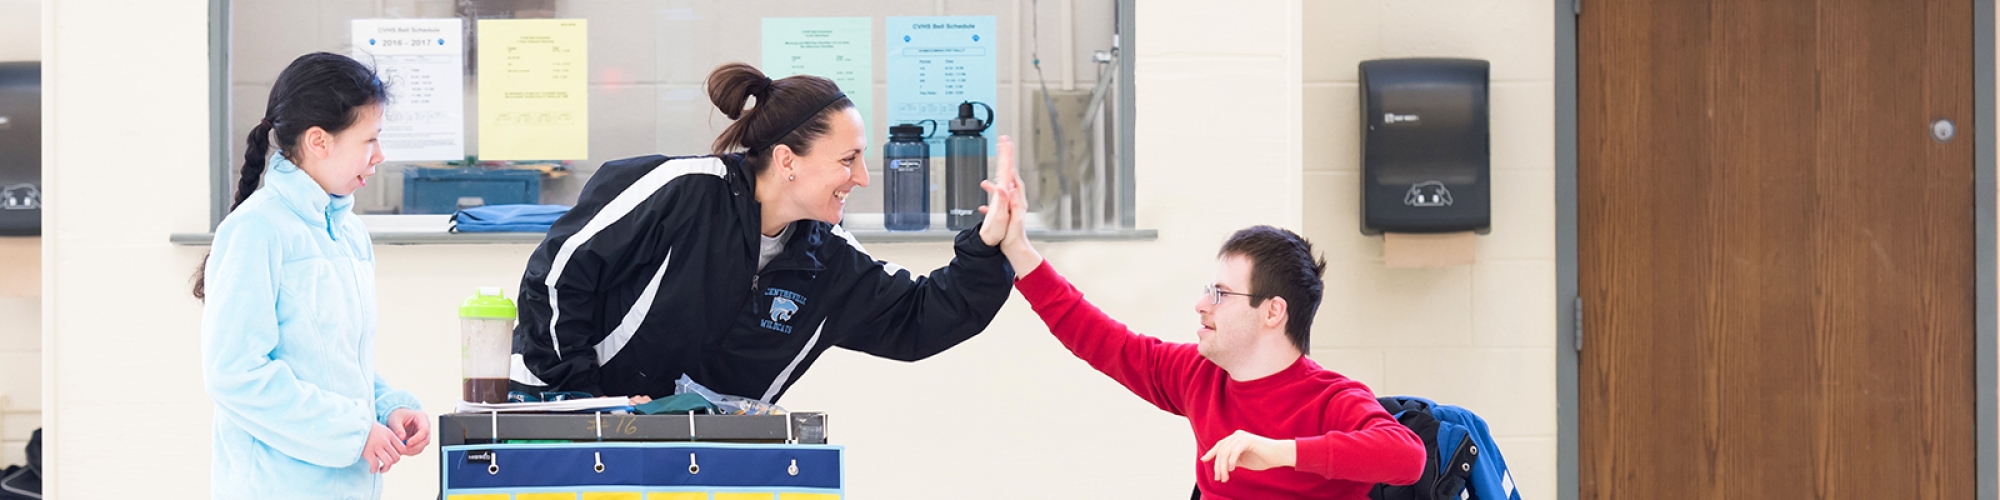 Photo of student giving teacher a high five